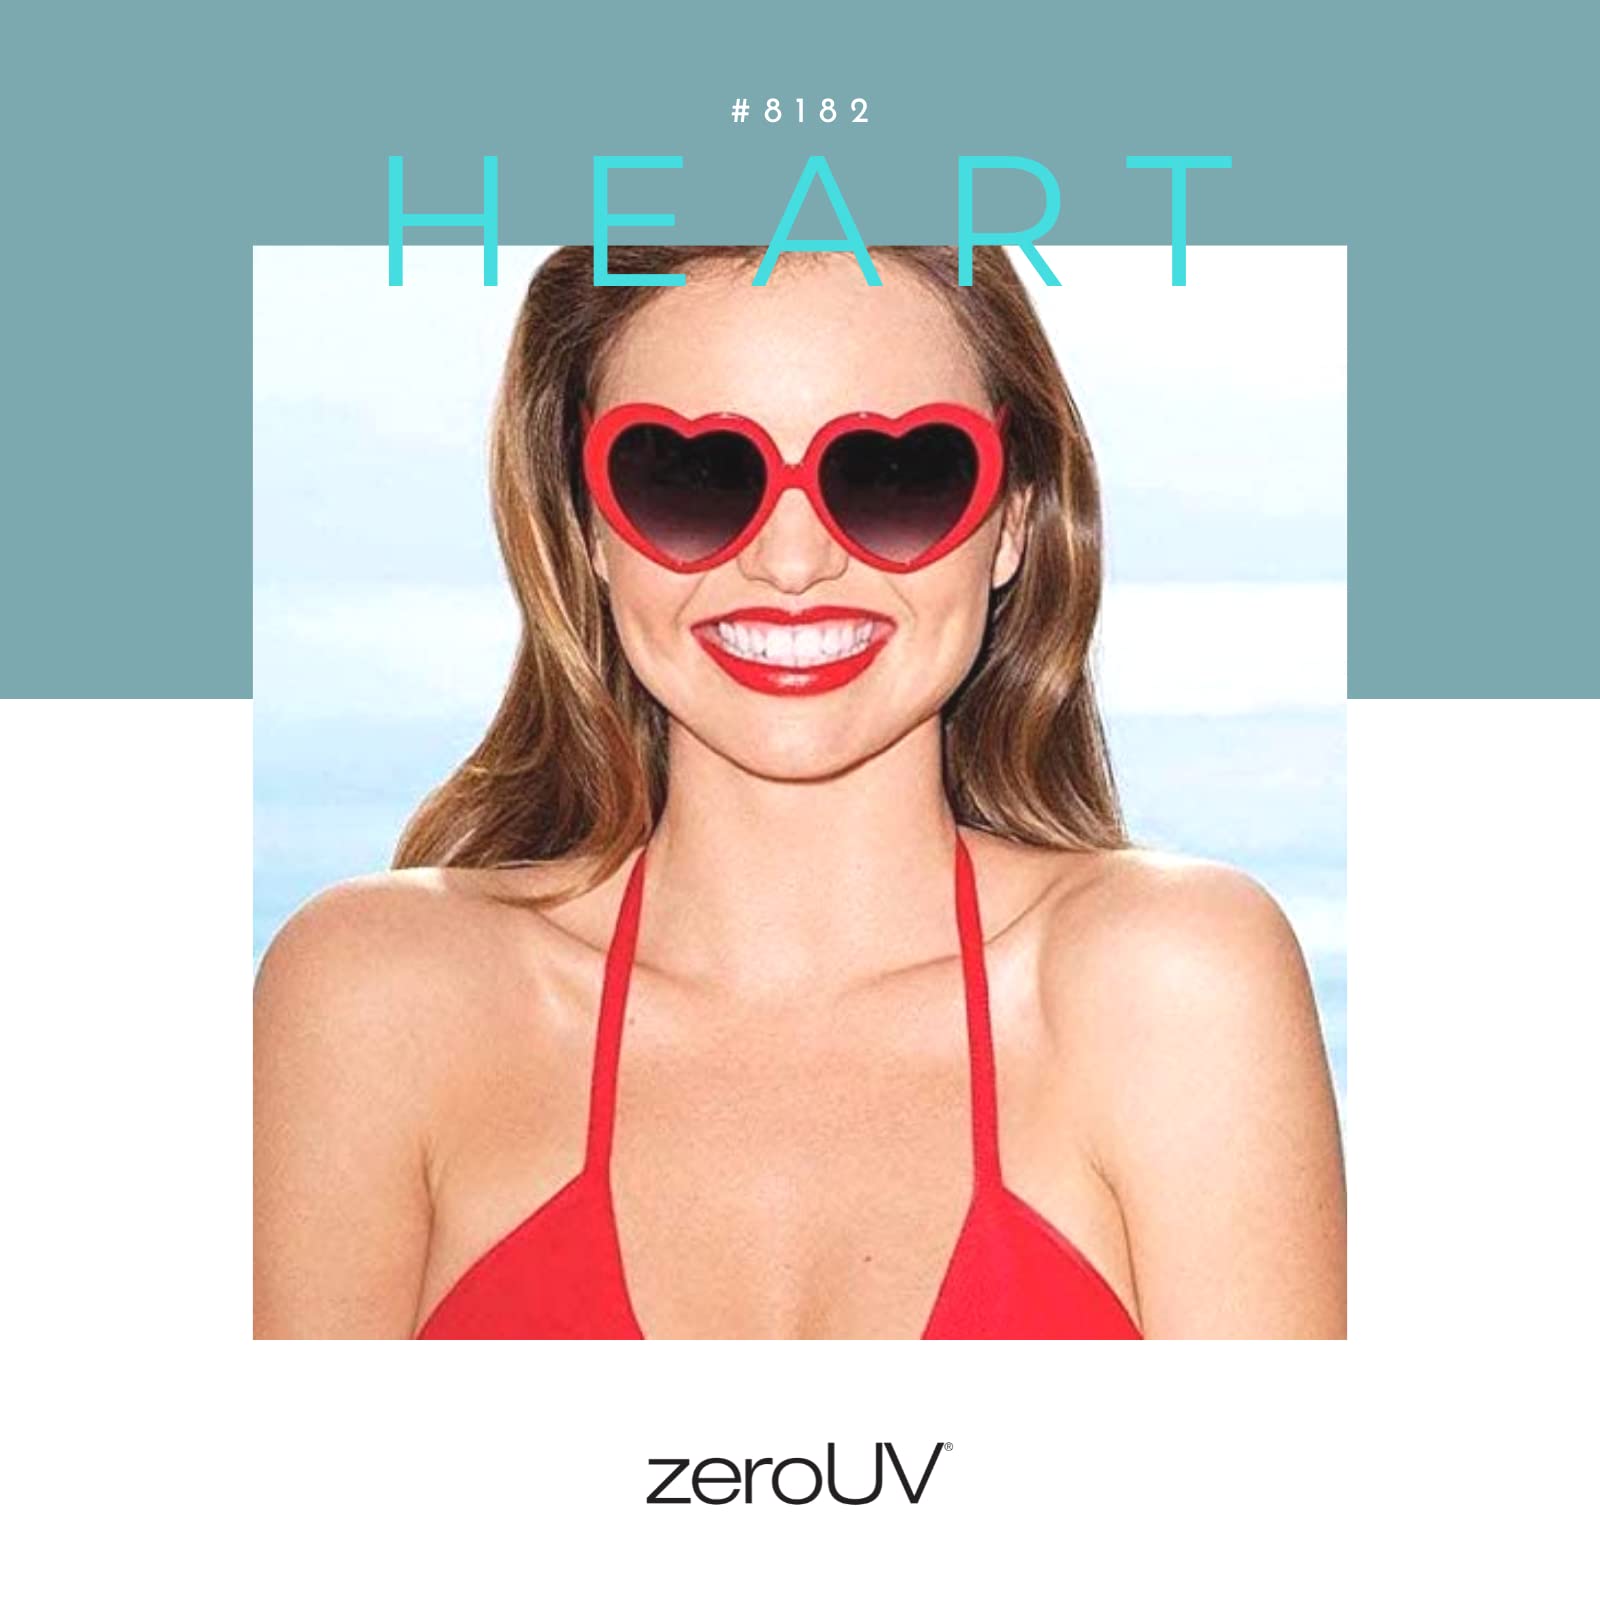 Oversized Heart Shaped Sunglasses UV400 Cute Trendy Love Fashion Eyewear for Women 52mm